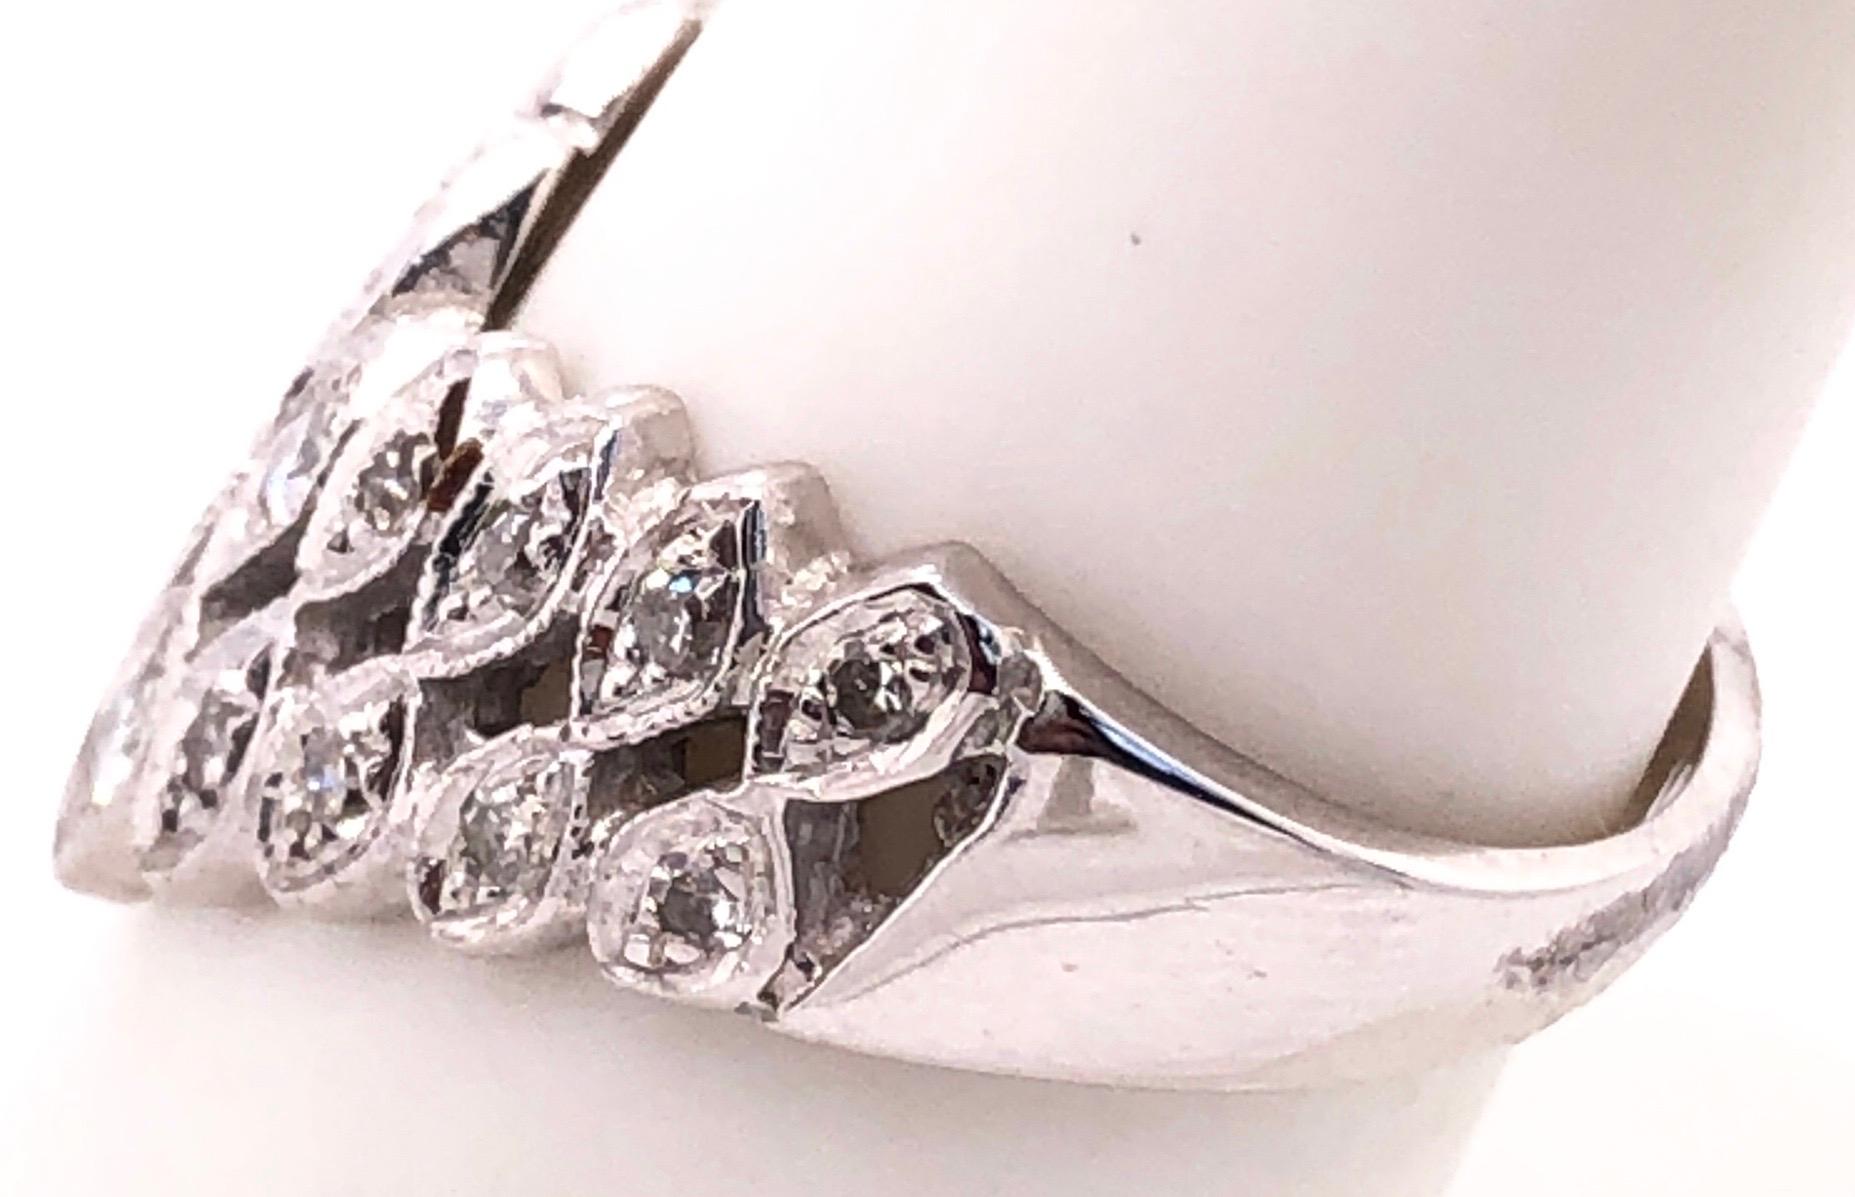 14 Karat White Gold And Diamond Band Wedding / Bridal Ring
0.75 total diamond weight.
Size 6
5 grams total weight.